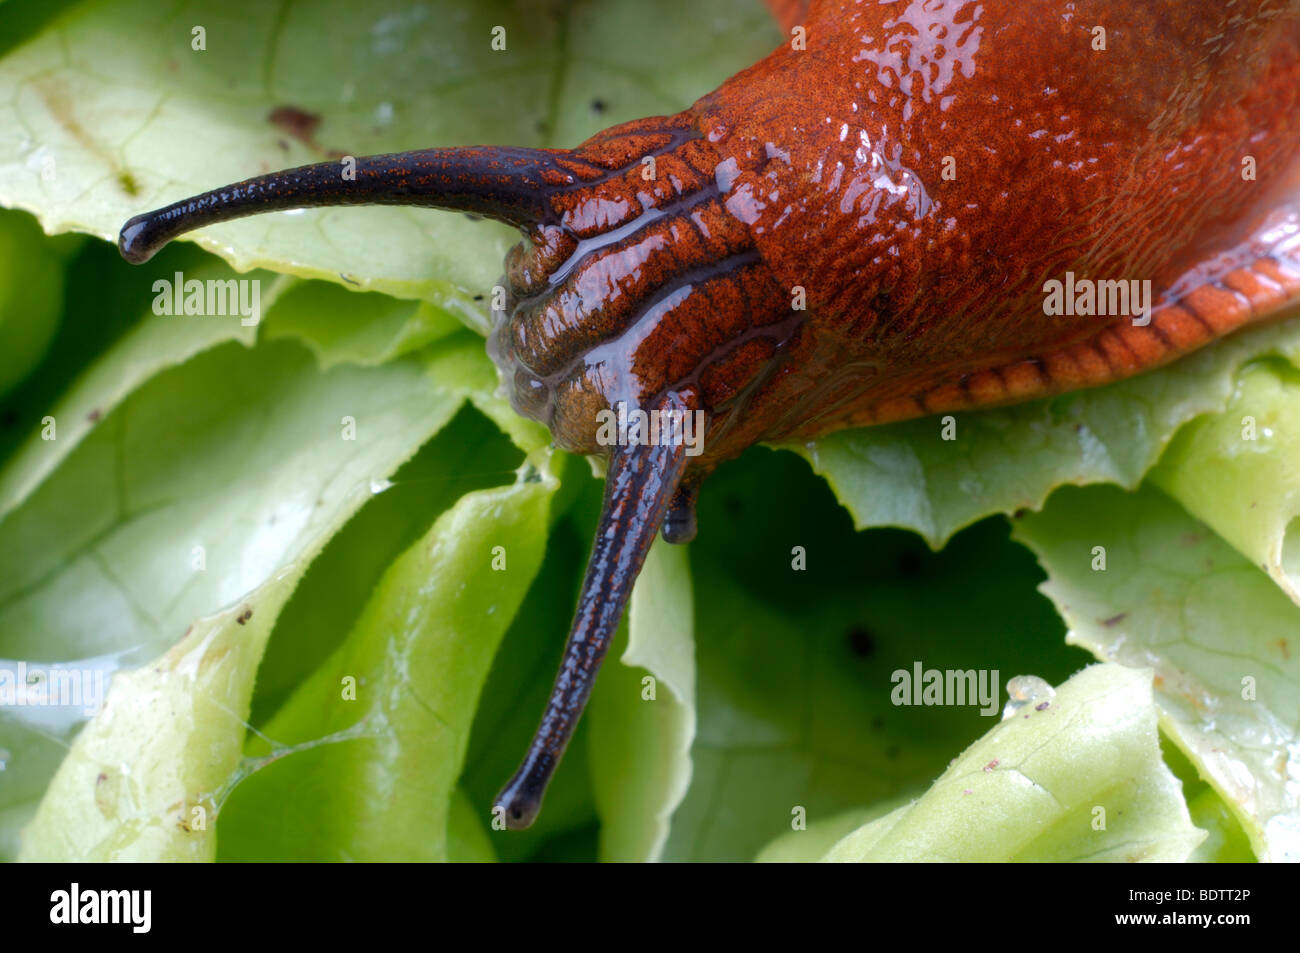 Lo spagnolo Slug, Lusitani Slug mangiare insalata, Arion lusitanicus, Spanische Wegschnecke frisst Salat, Arion lusitanicus Foto Stock